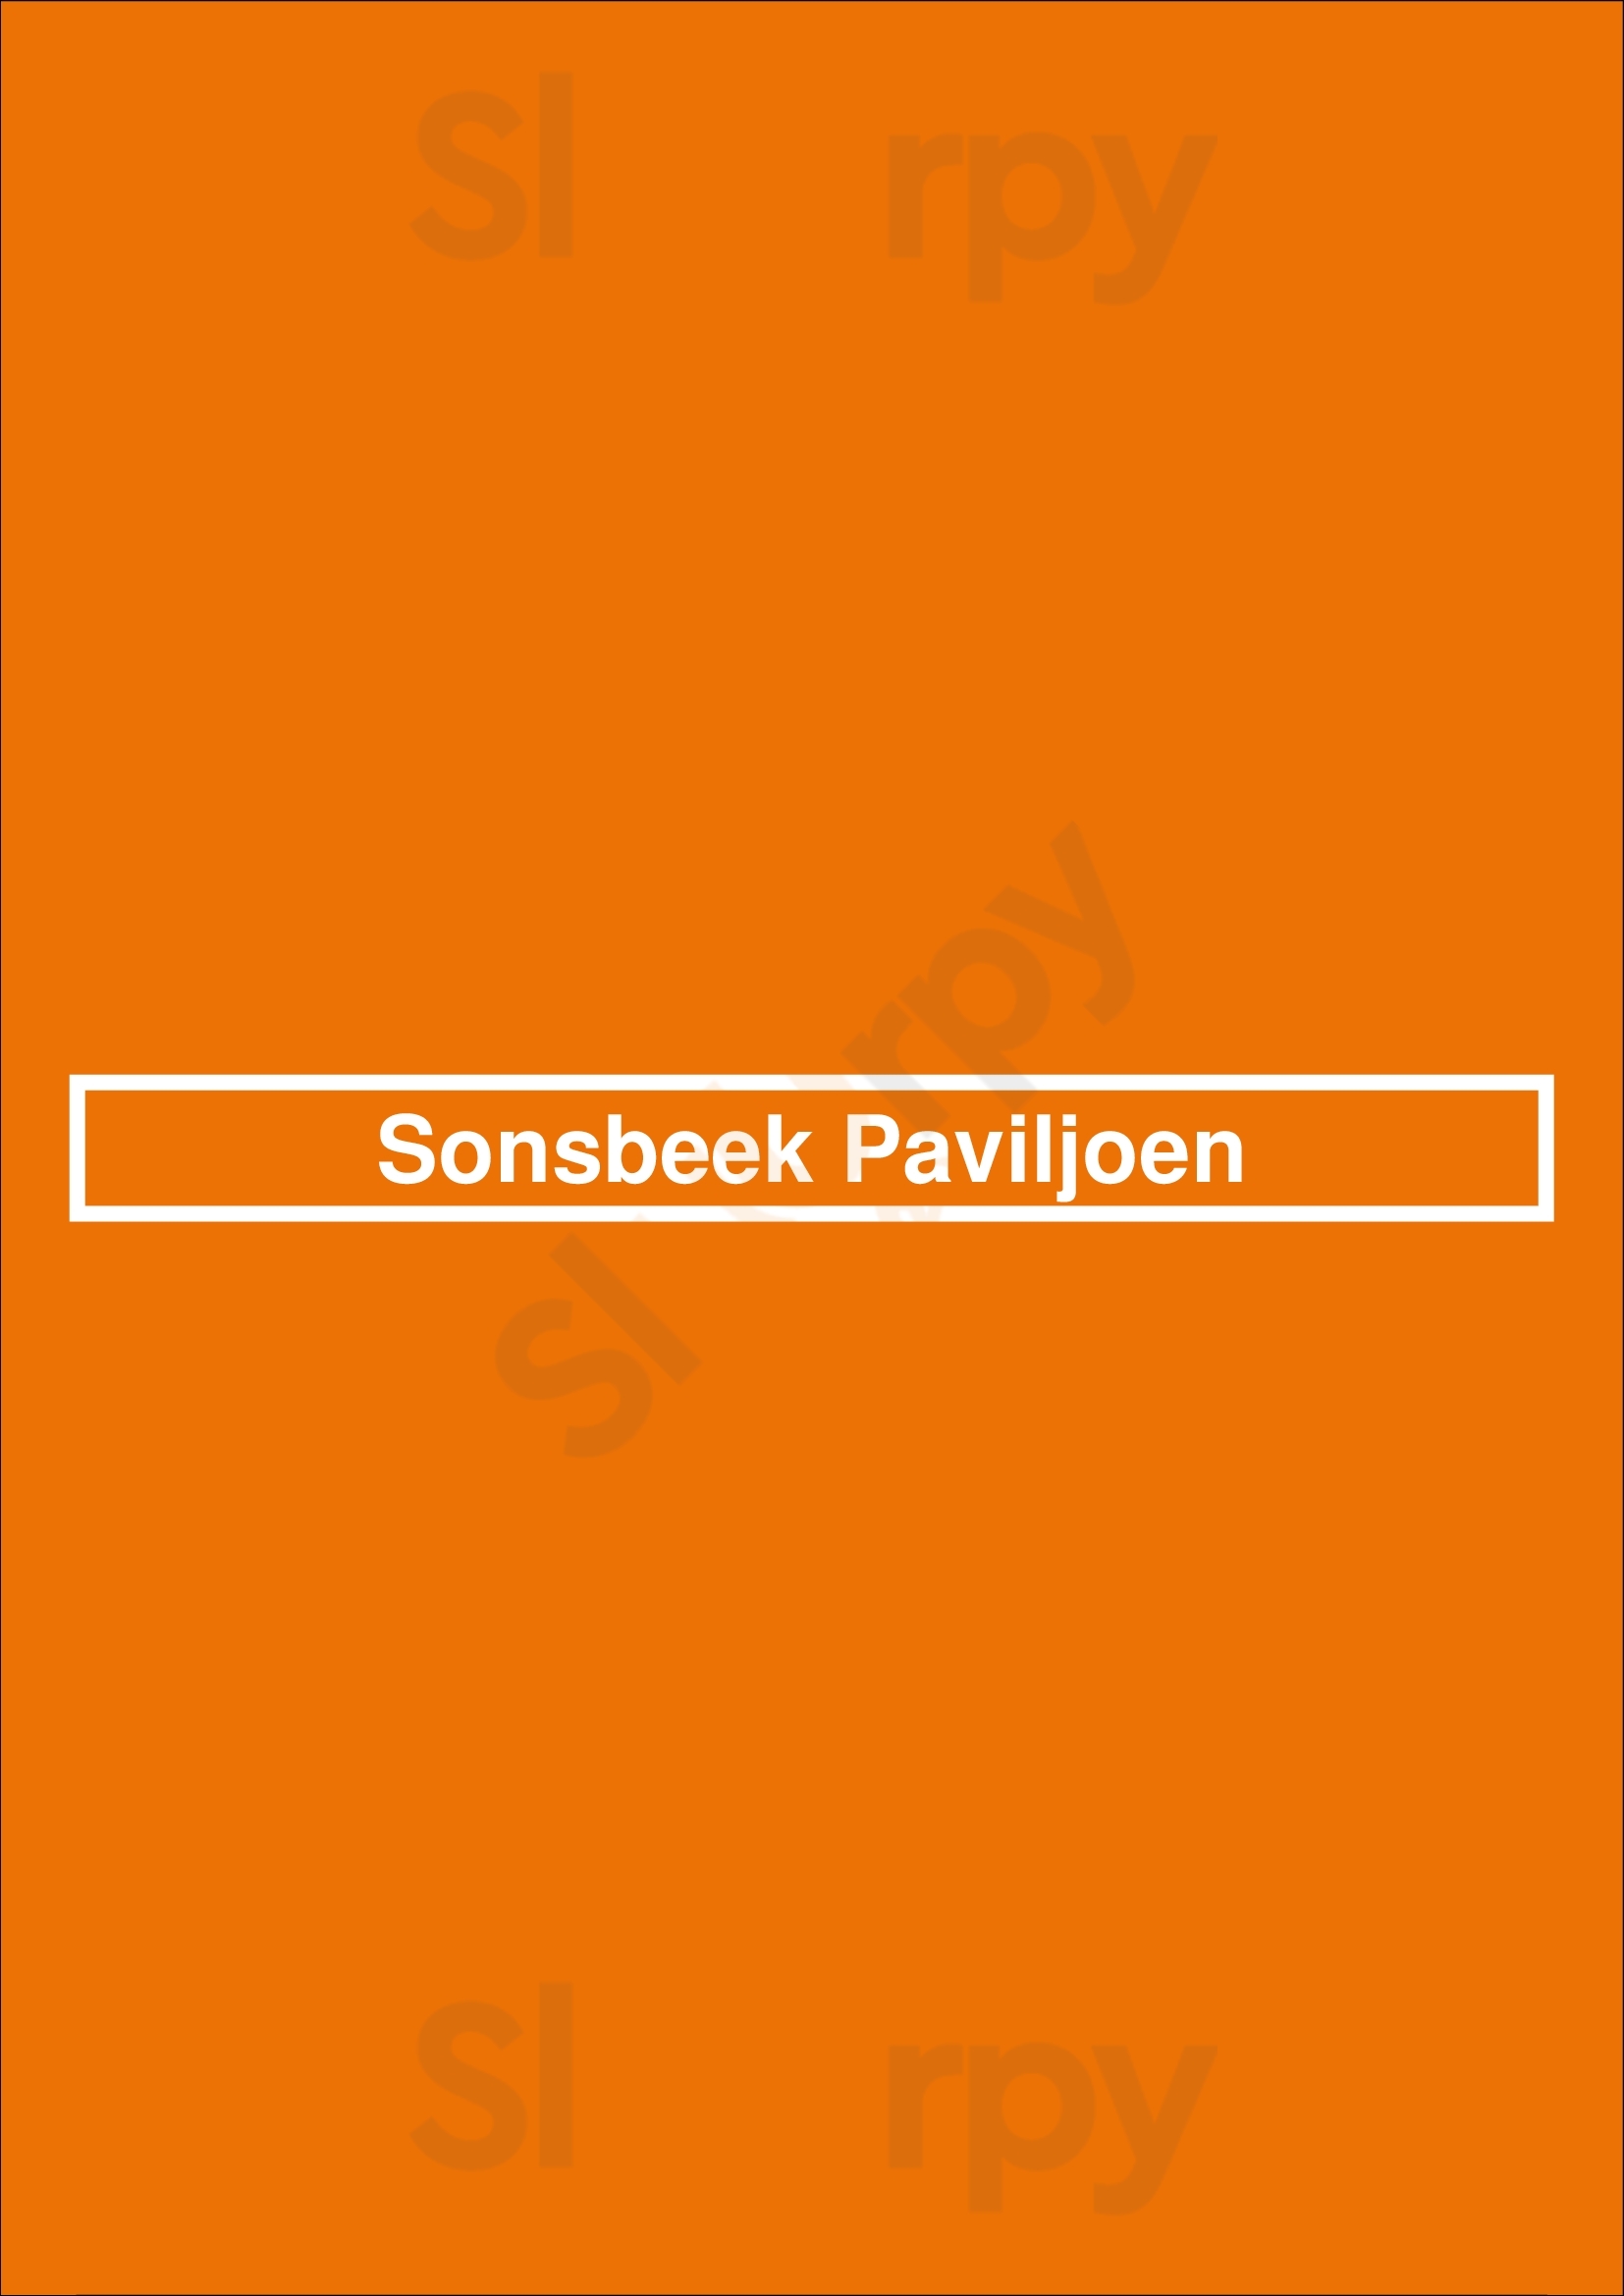 Sonsbeek Paviljoen Arnhem Menu - 1